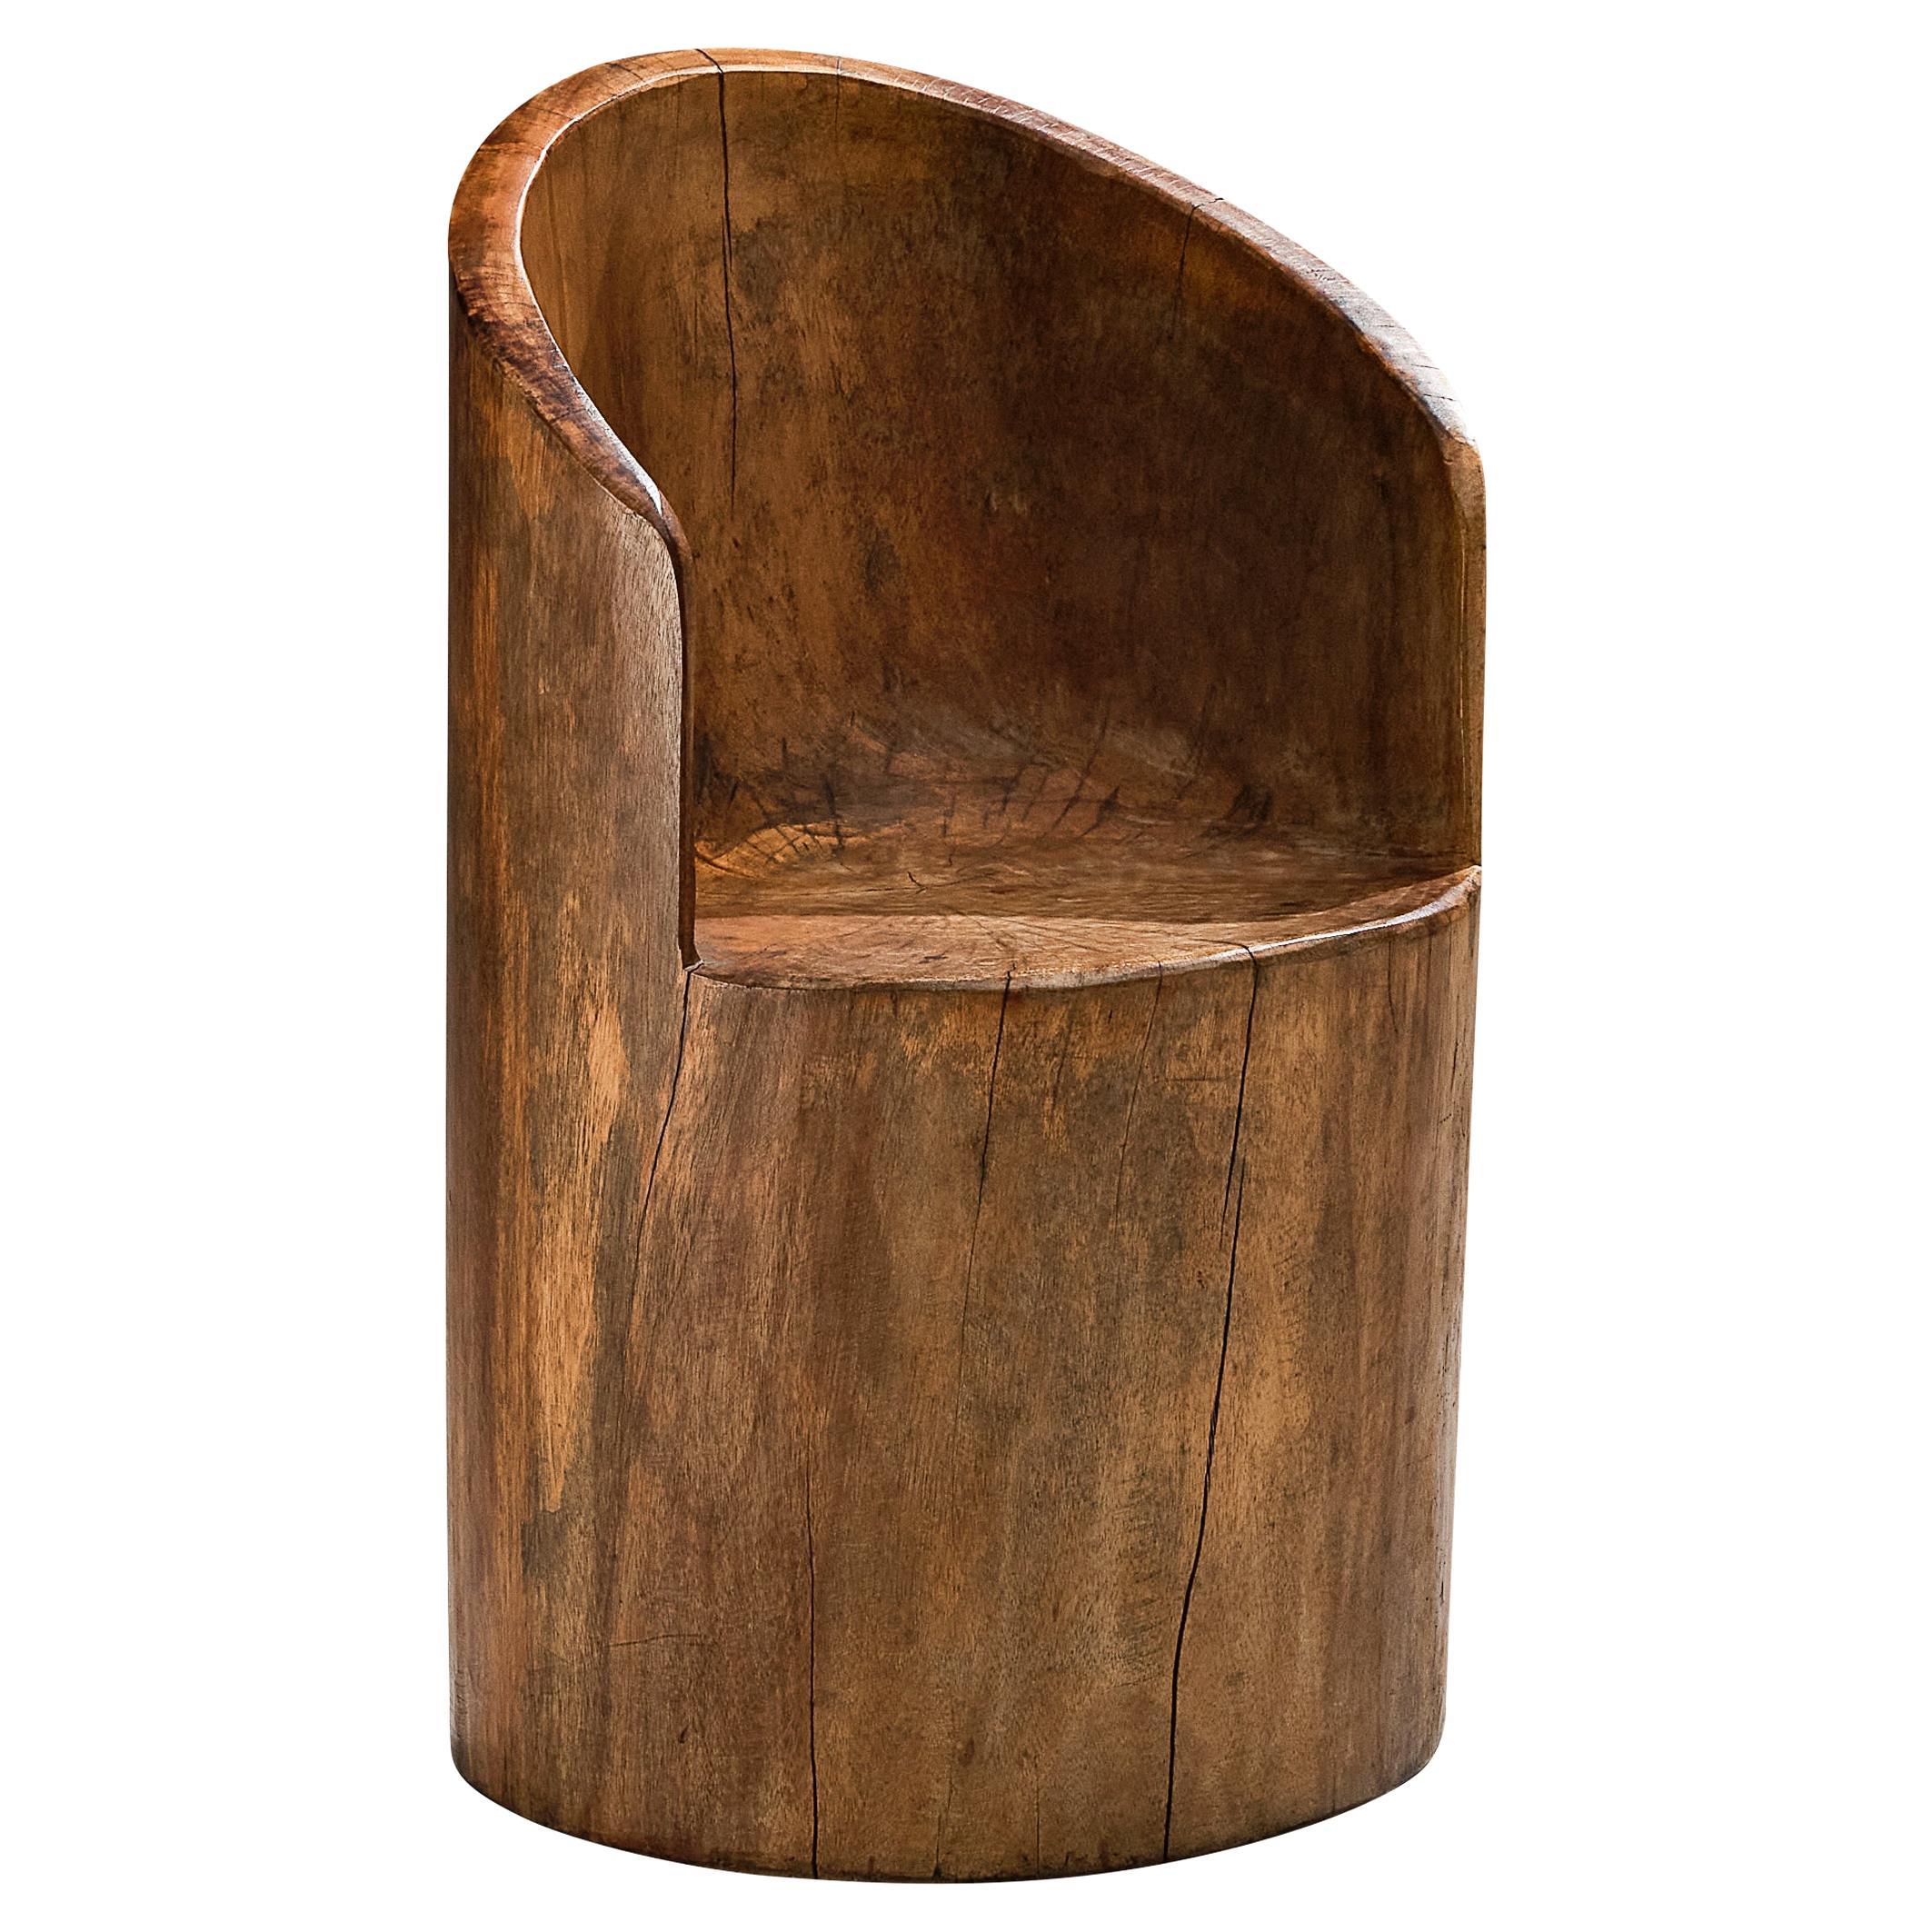 José Zanine Caldas Hand-Sculpted Chair in Brazilian Hardwood 